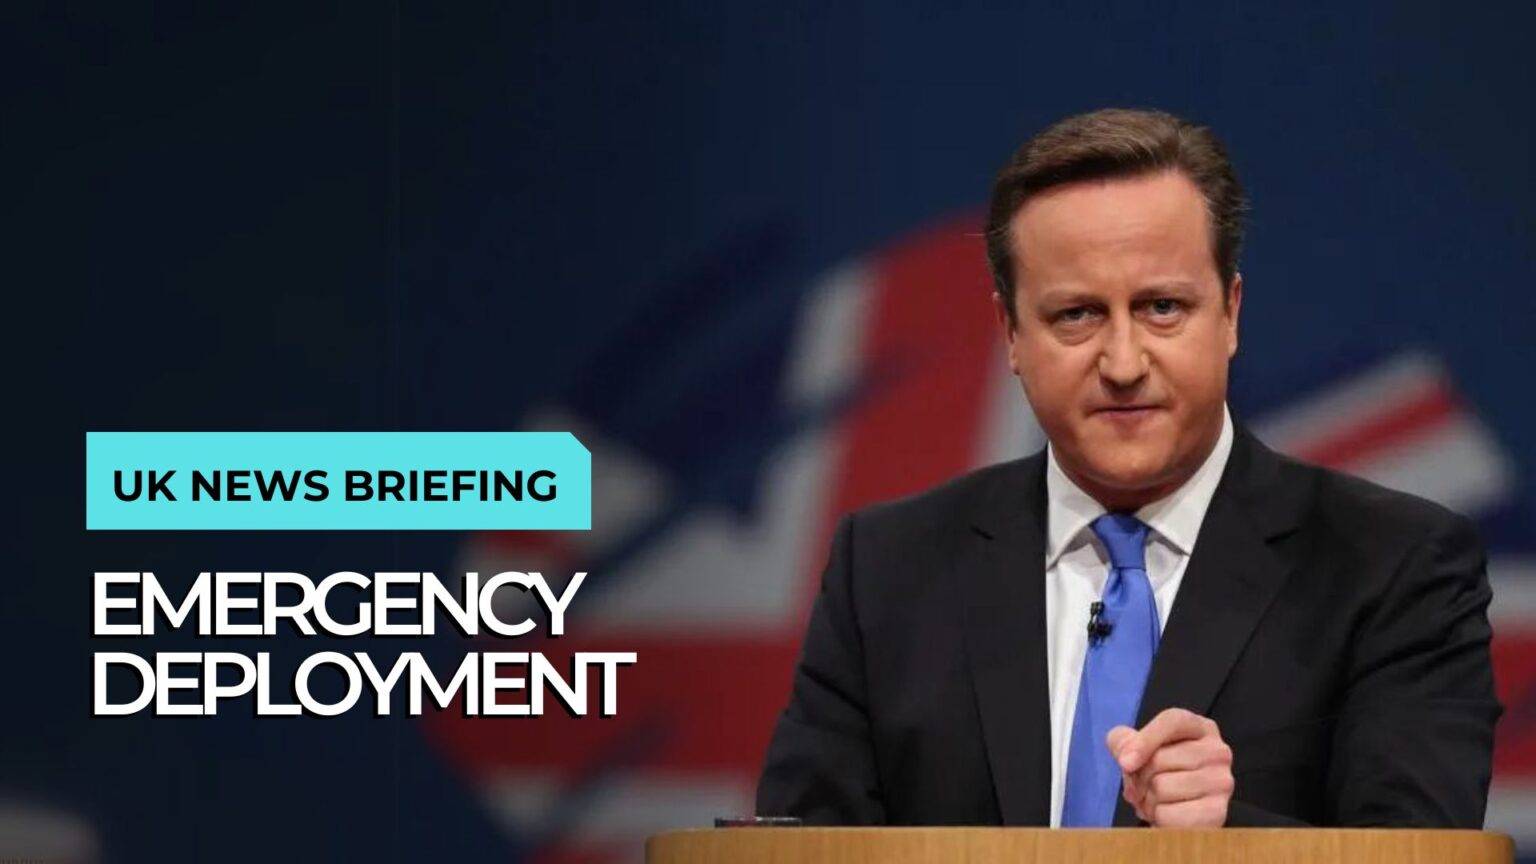 David Cameron alerts to Gaza famine as UK sends Royal Navy for aid